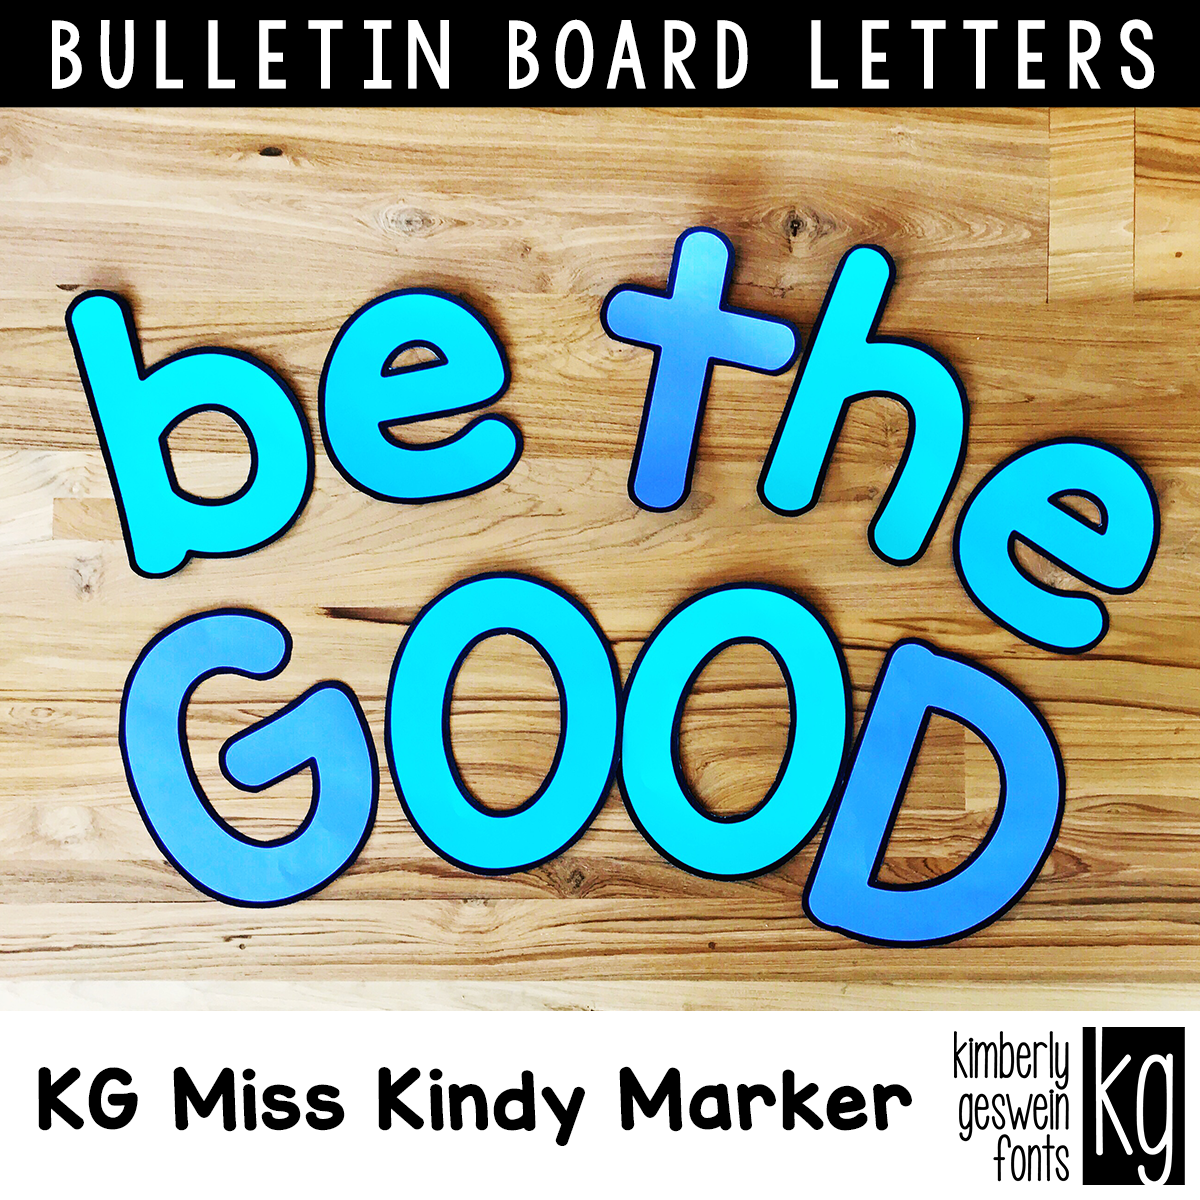 KG Miss Kindy Marker Bulletin Board Letters - Kimberly Geswein Fonts